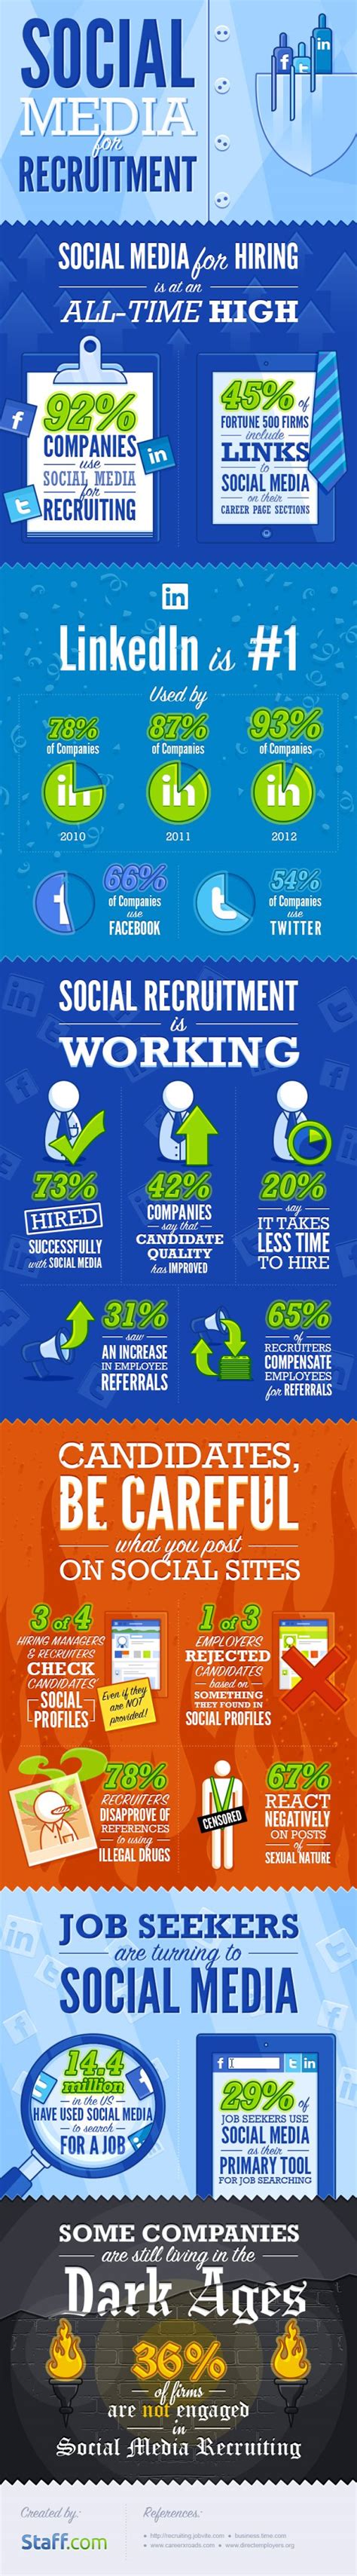 using social media for recruitment infographic